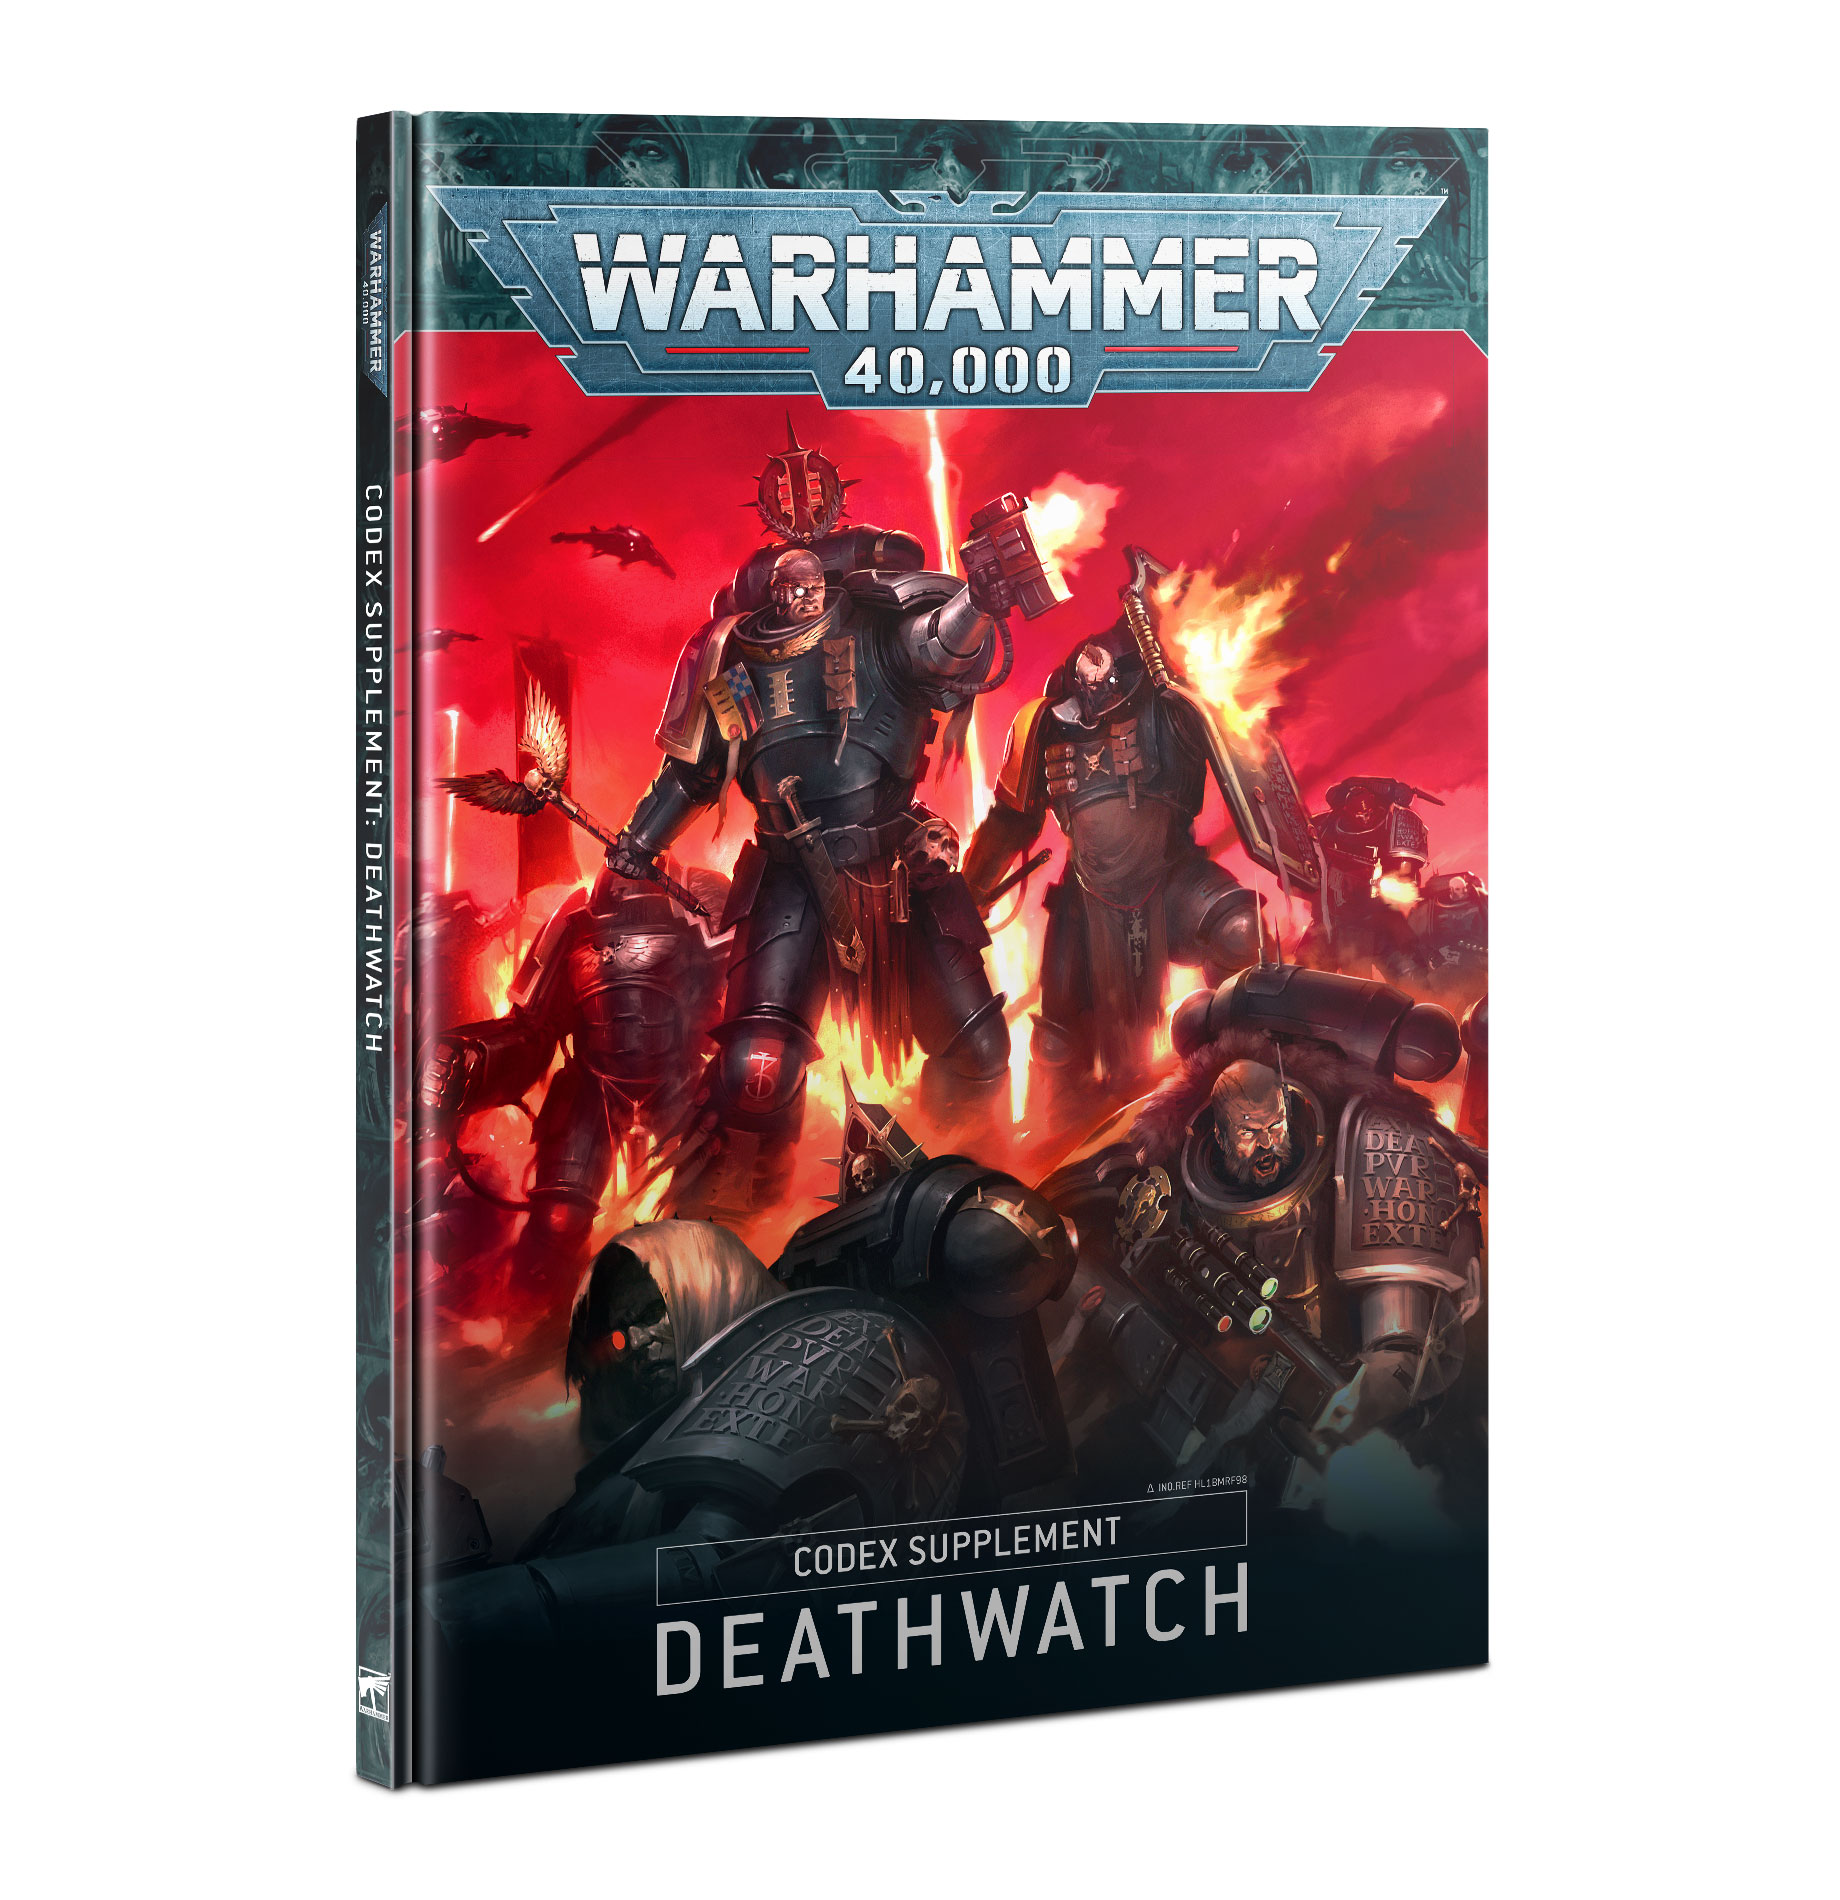 Codex Supplément V.9 Deathwatch - Space Marines - Warhammer 40.000 - En Français